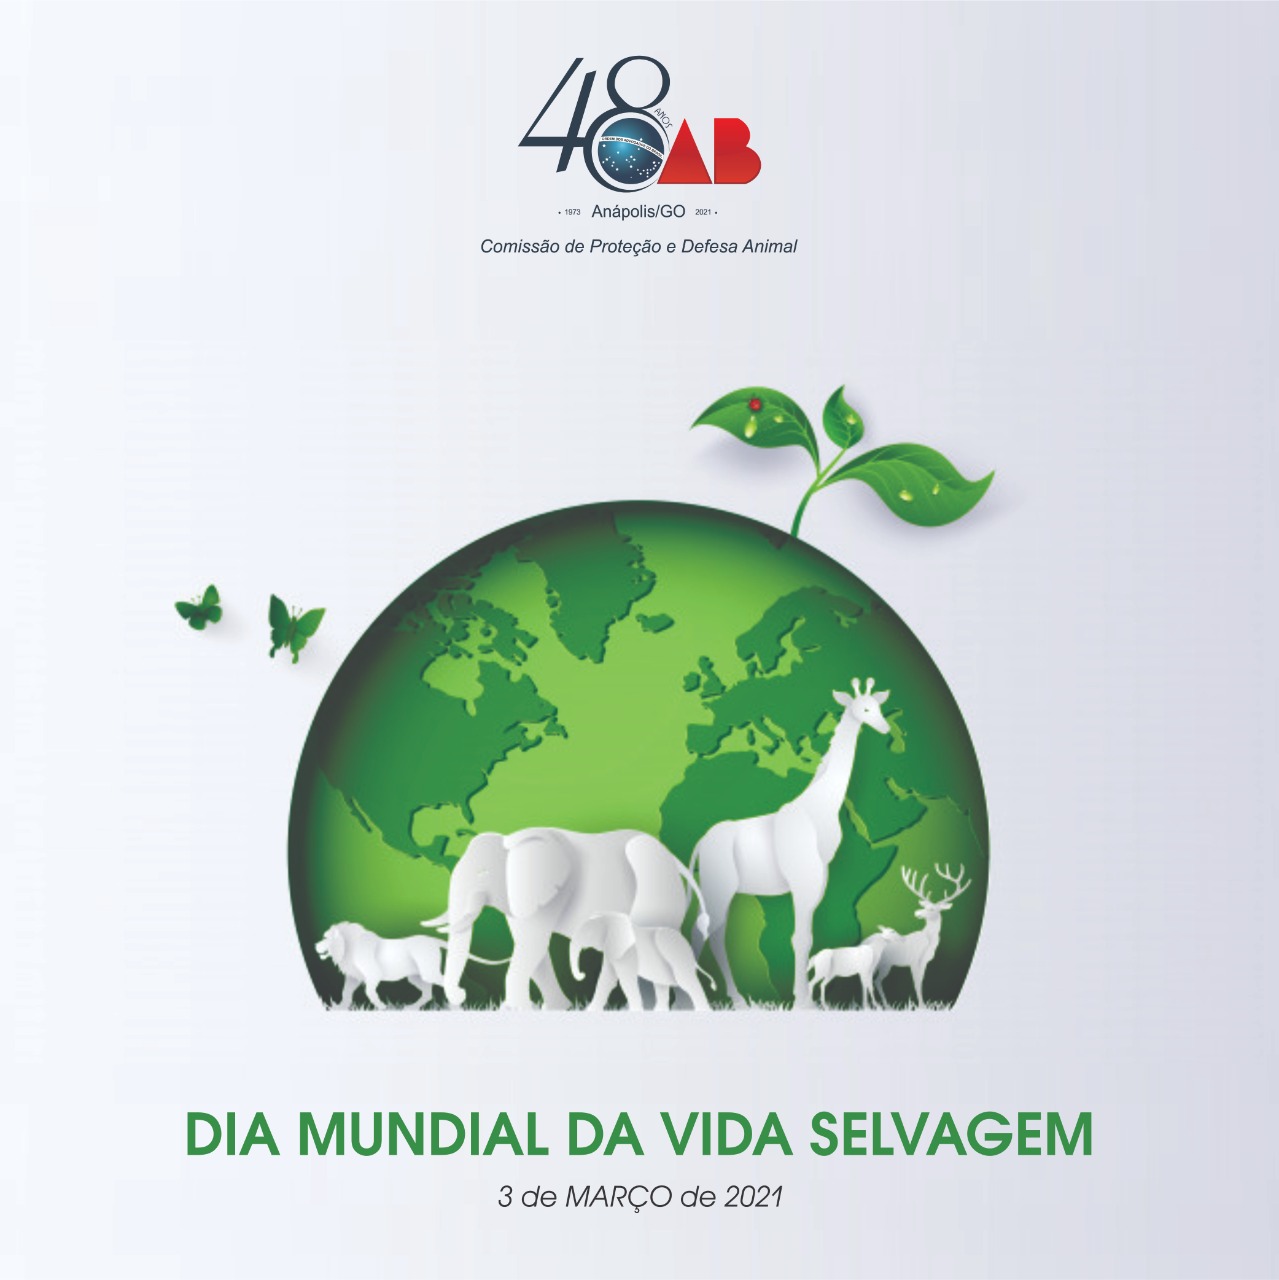 Dia Mundial da Vida Selvagem (03/03/2021)